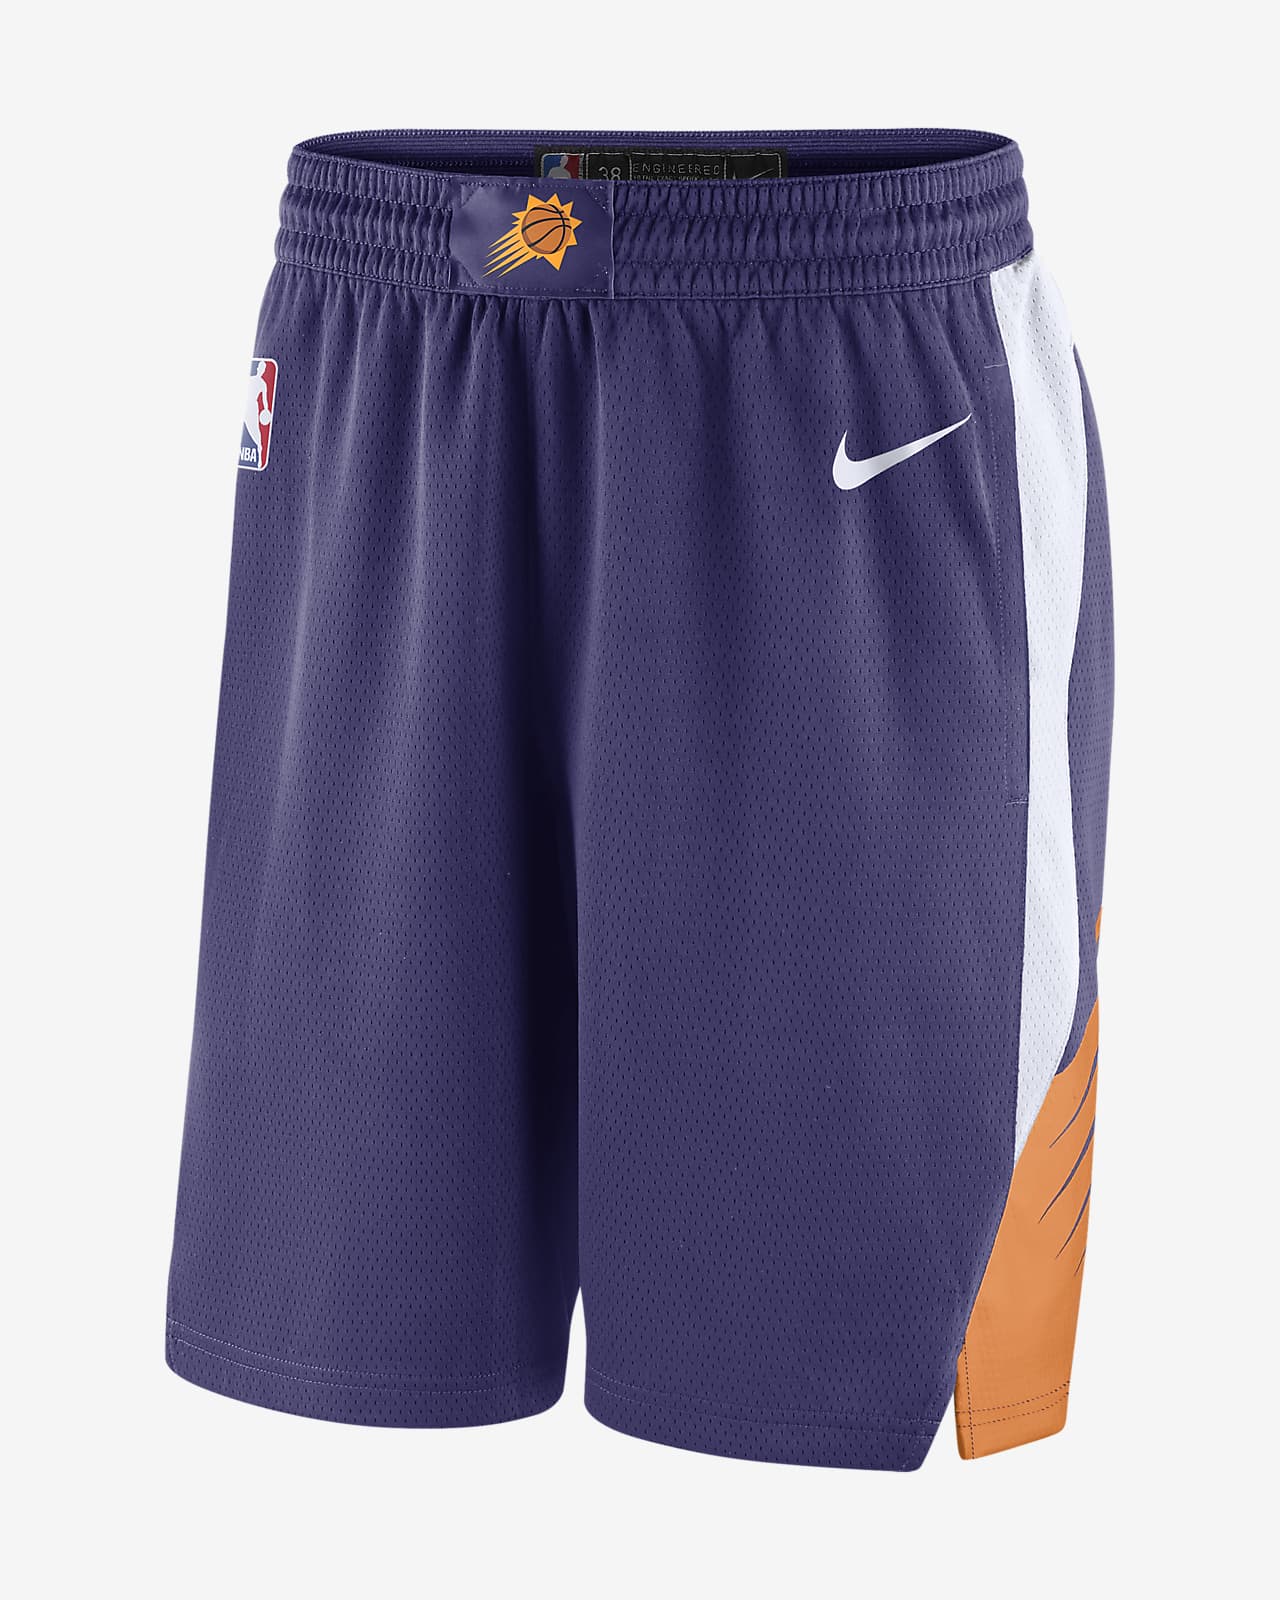 Phoenix Suns Shorts - Alleson Youth Nba Phoenix Suns Shorts : Equip ...